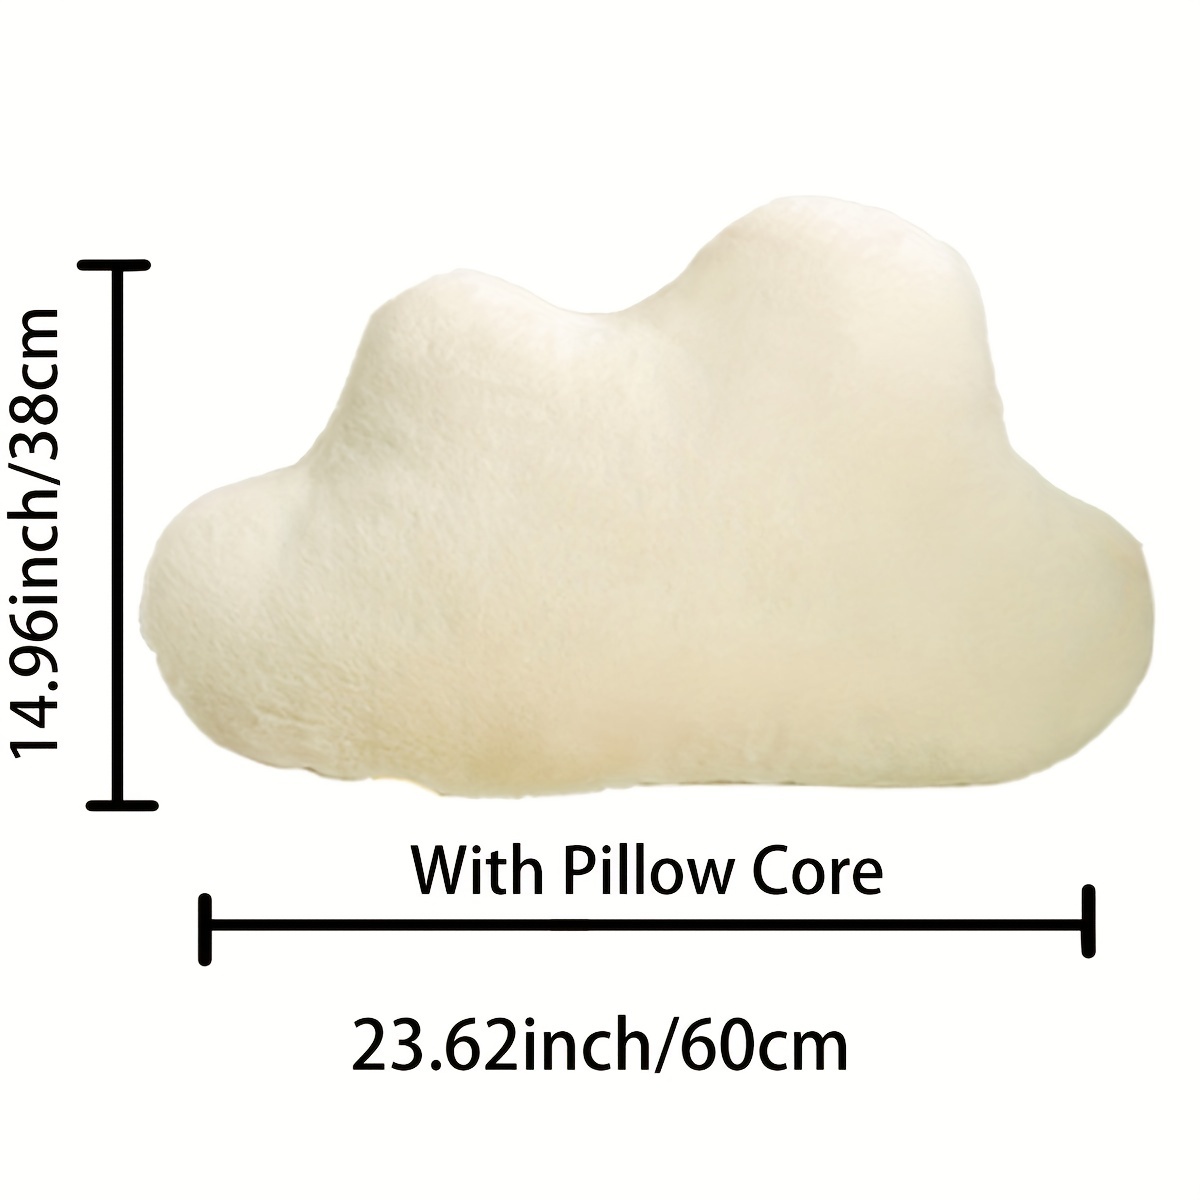 Cloud Pillow, Cute Pillows Clouds Shaped Throw Pillows, Decorative